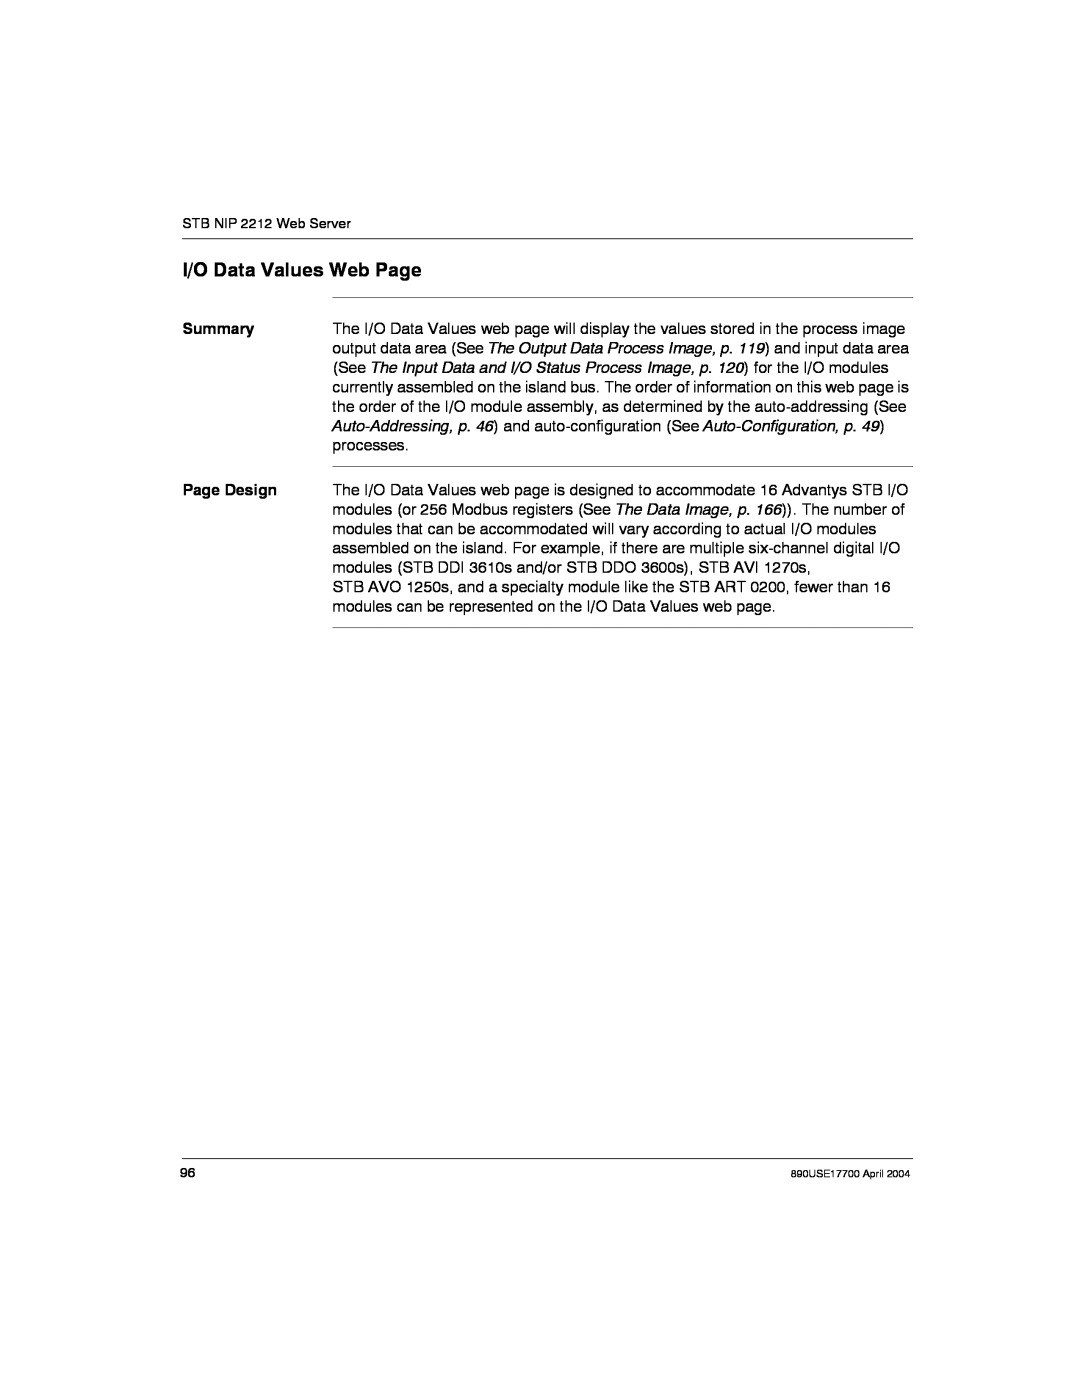 Schneider Electric 890USE17700 manual I/O Data Values Web Page, processes 